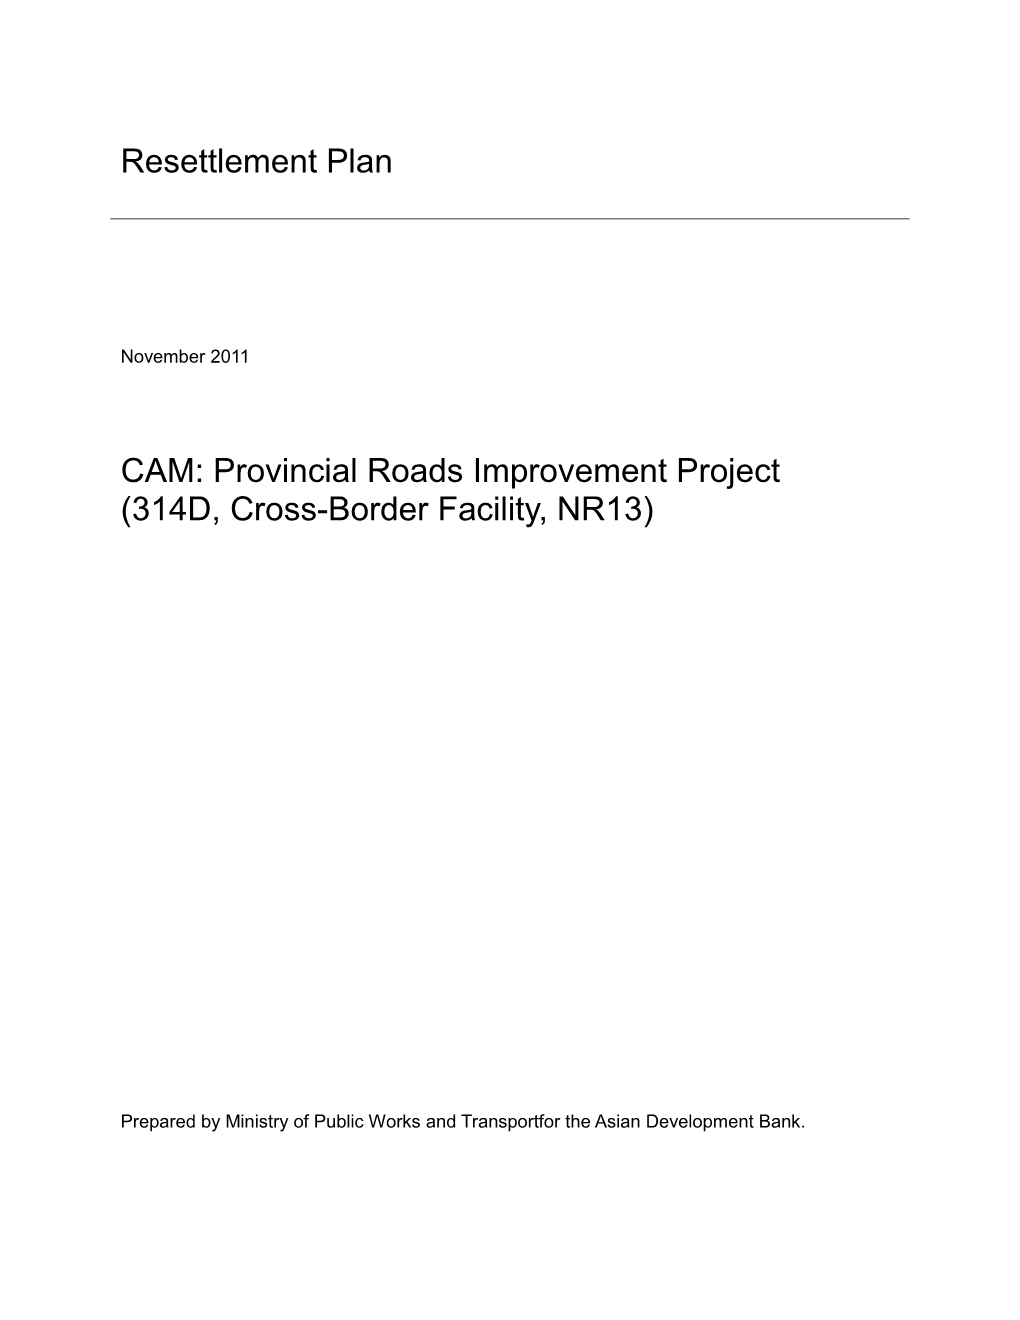 RP: Cambodia: Provincial Roads Improvement Project (314D, Cross-Border Facility, NR13)